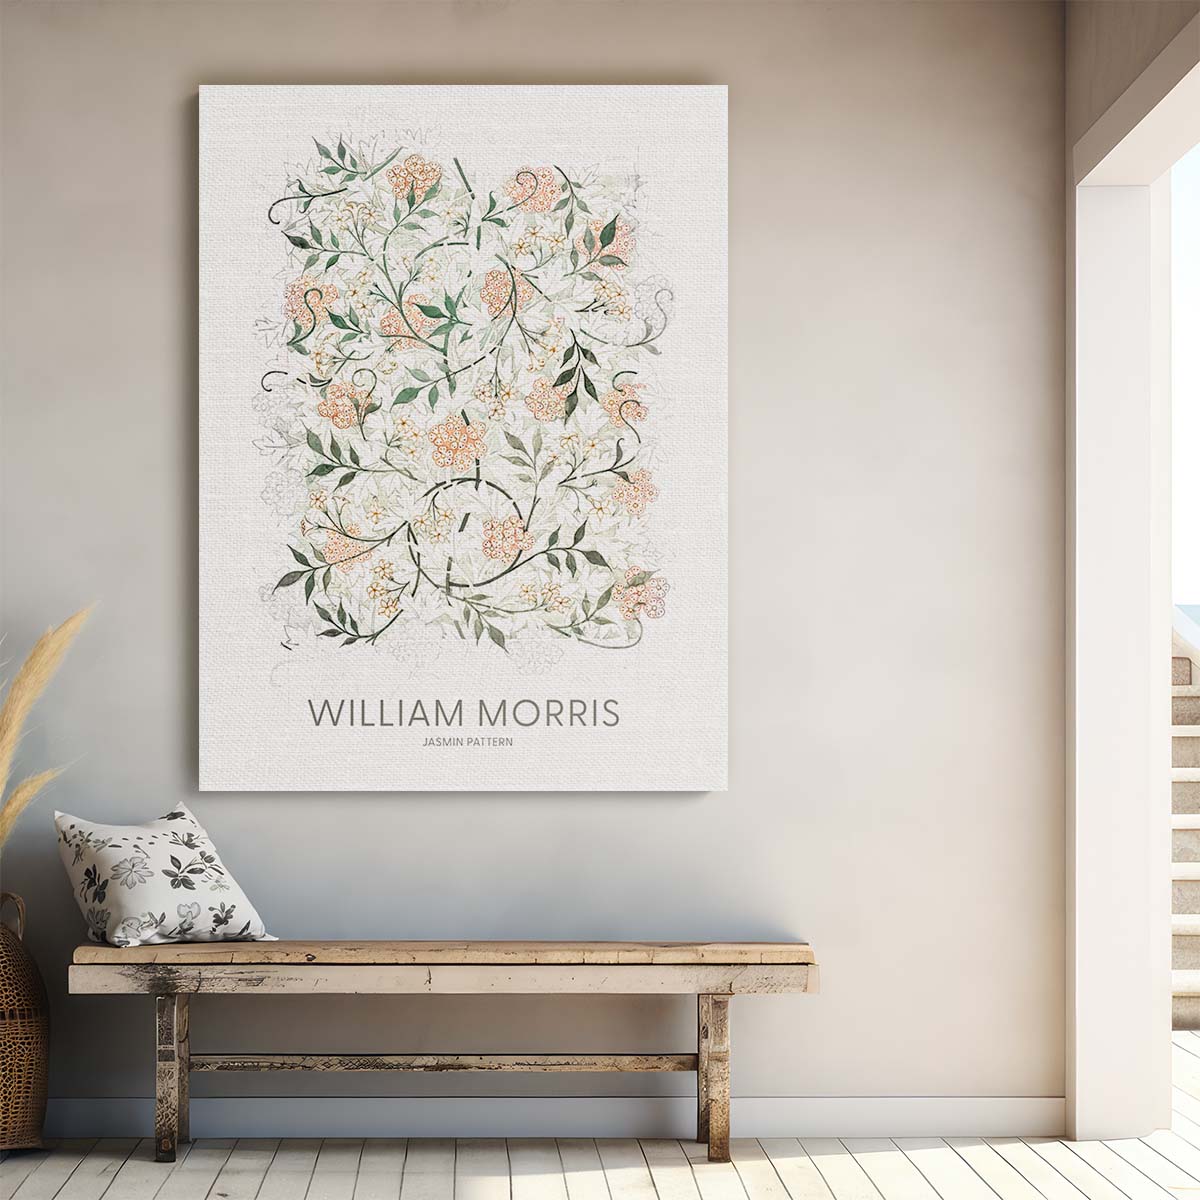 William Morris 'Jasmine' Vintage Botanical Illustration Wall Art by Luxuriance Designs, made in USA